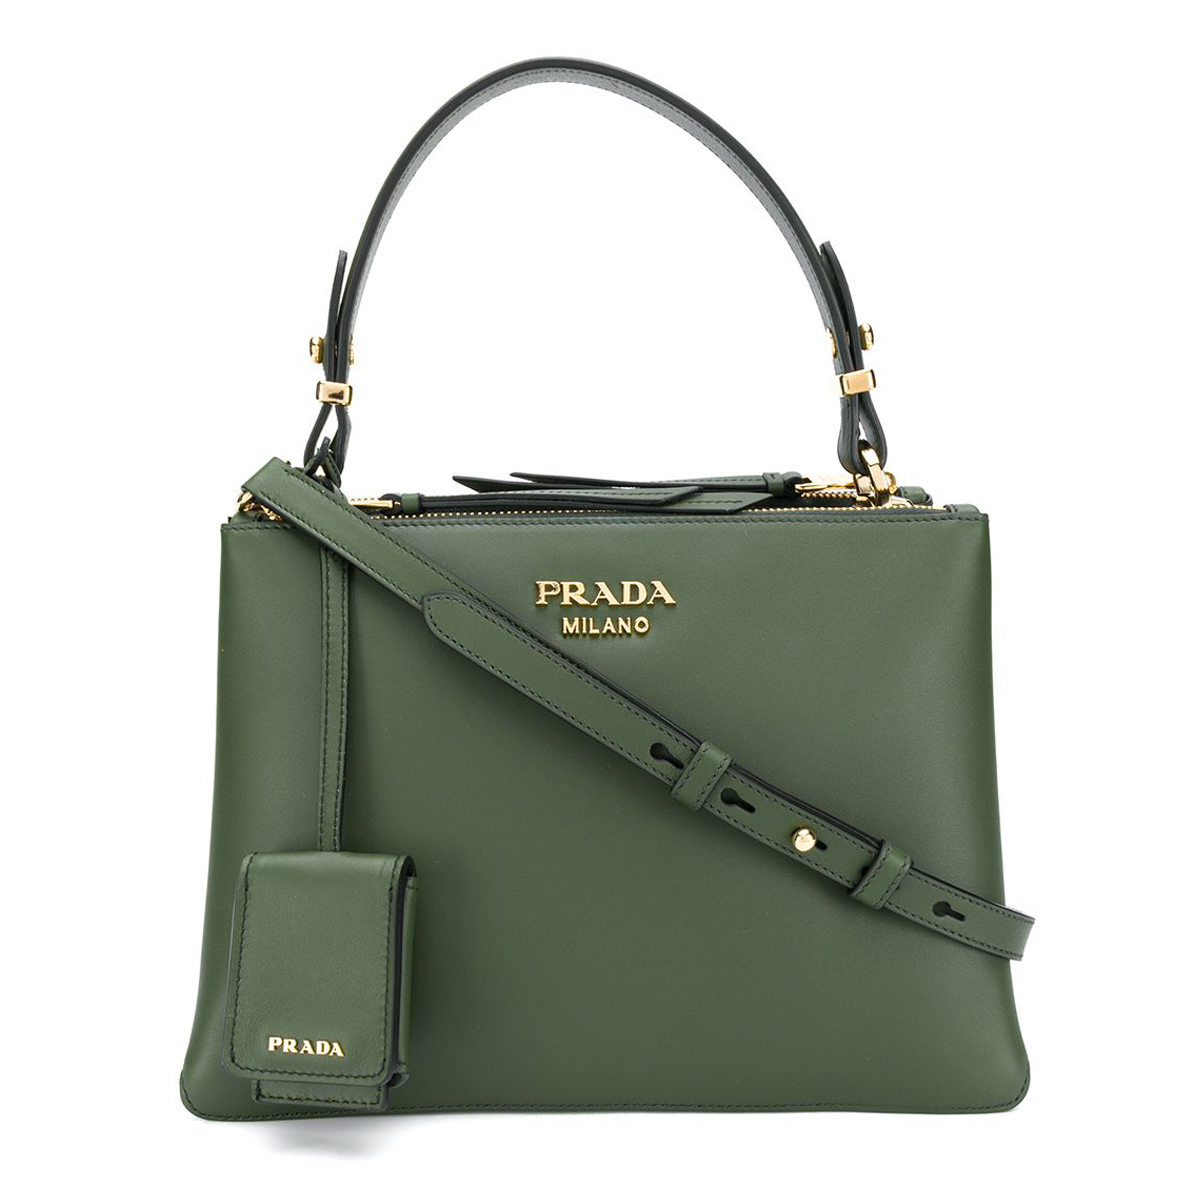 prada milano green purse